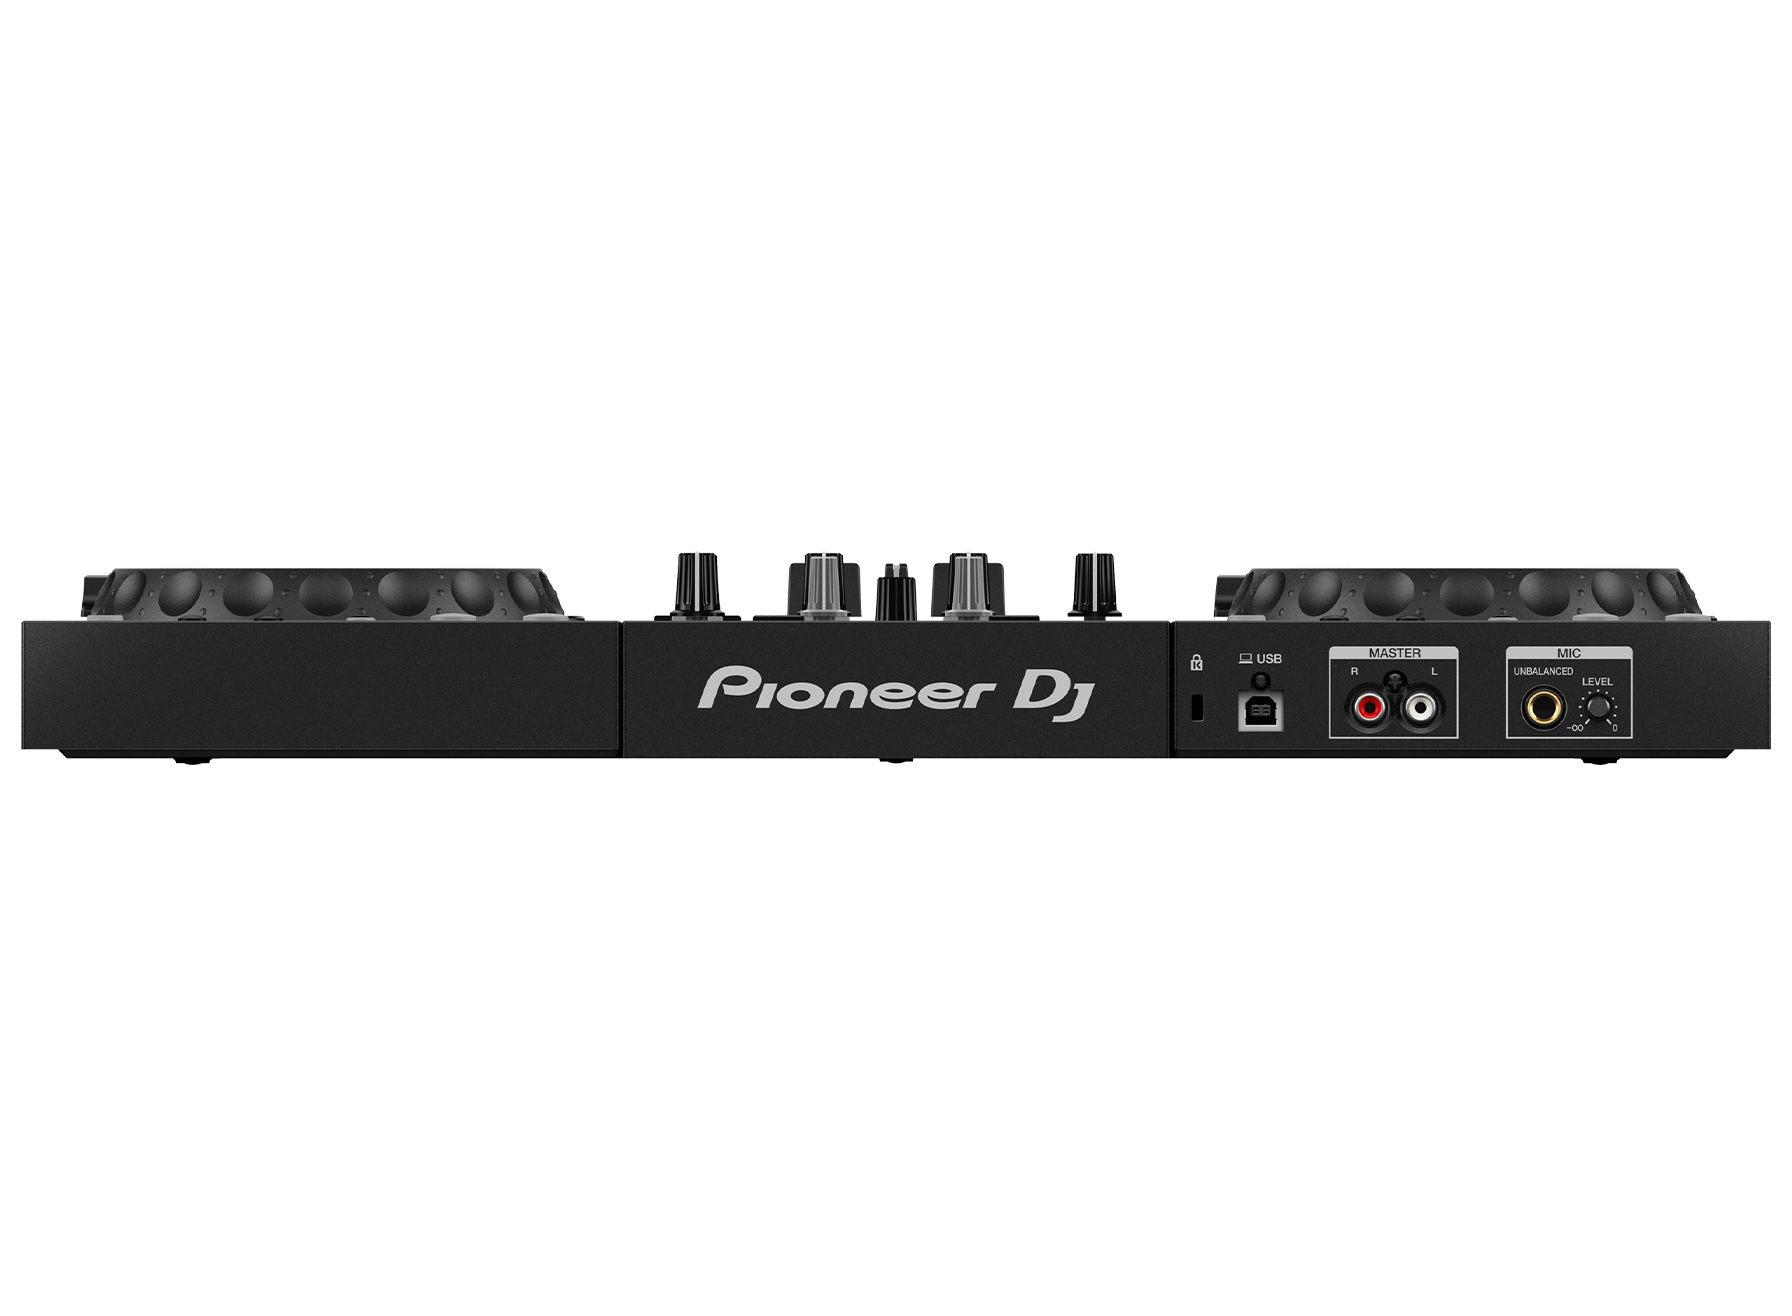 DDJ-400 - 2-channel DJ controller for rekordbox dj (Black)